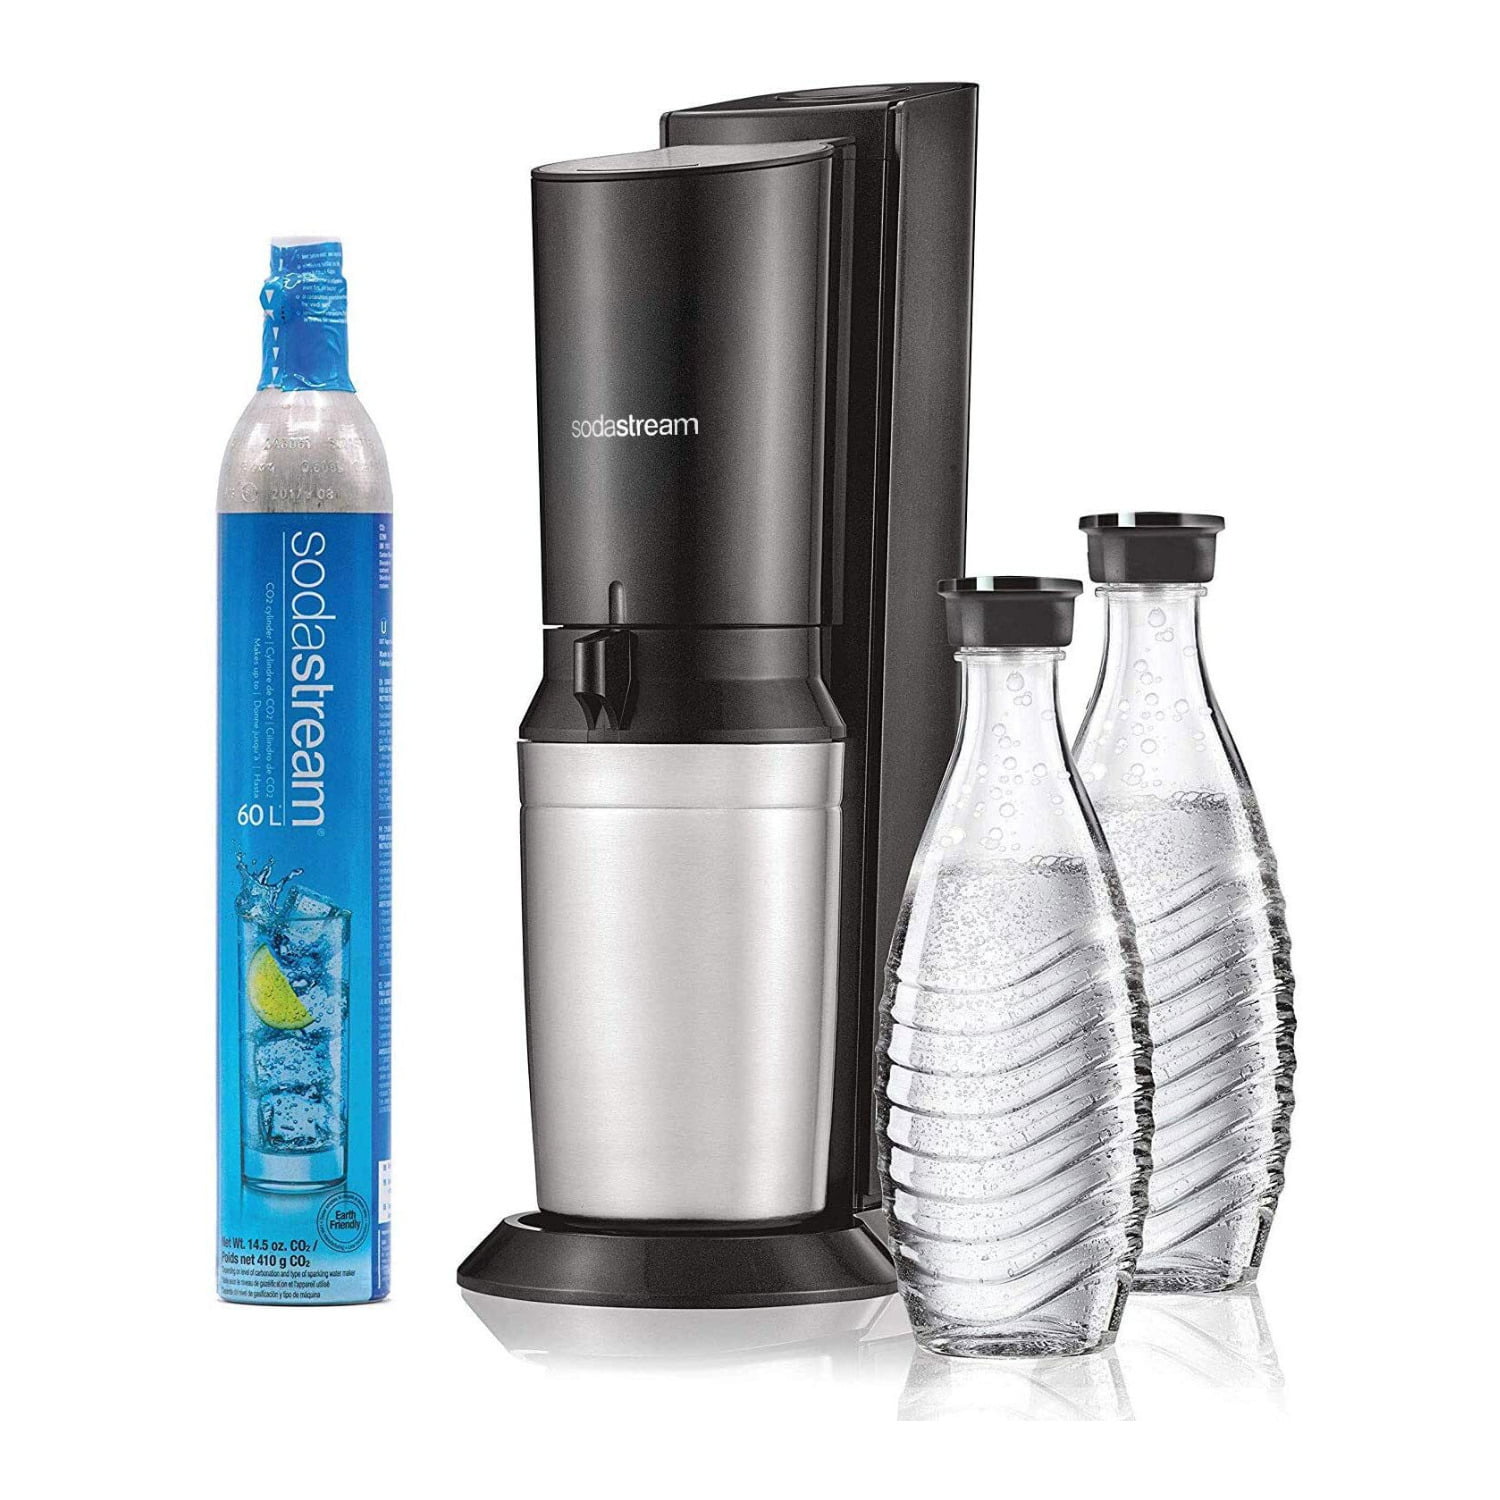 SodaStream Aqua Fizz Sparkling Water Maker Kit (Black) with Co2 & Glass Carafes